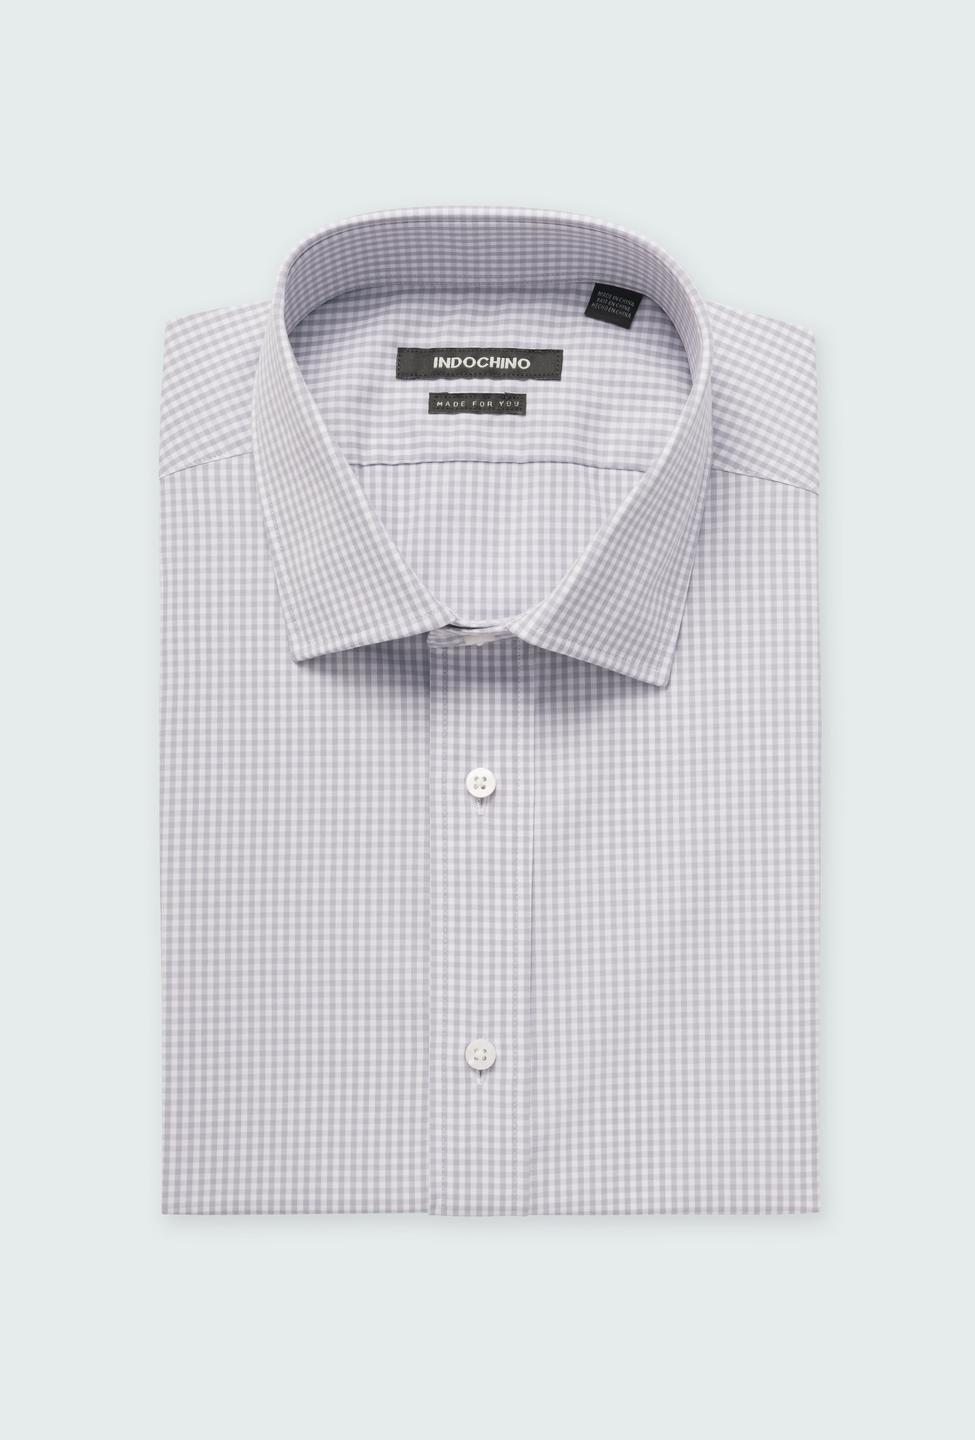 Helston Anti-Wrinkle Gingham Gray Shirt